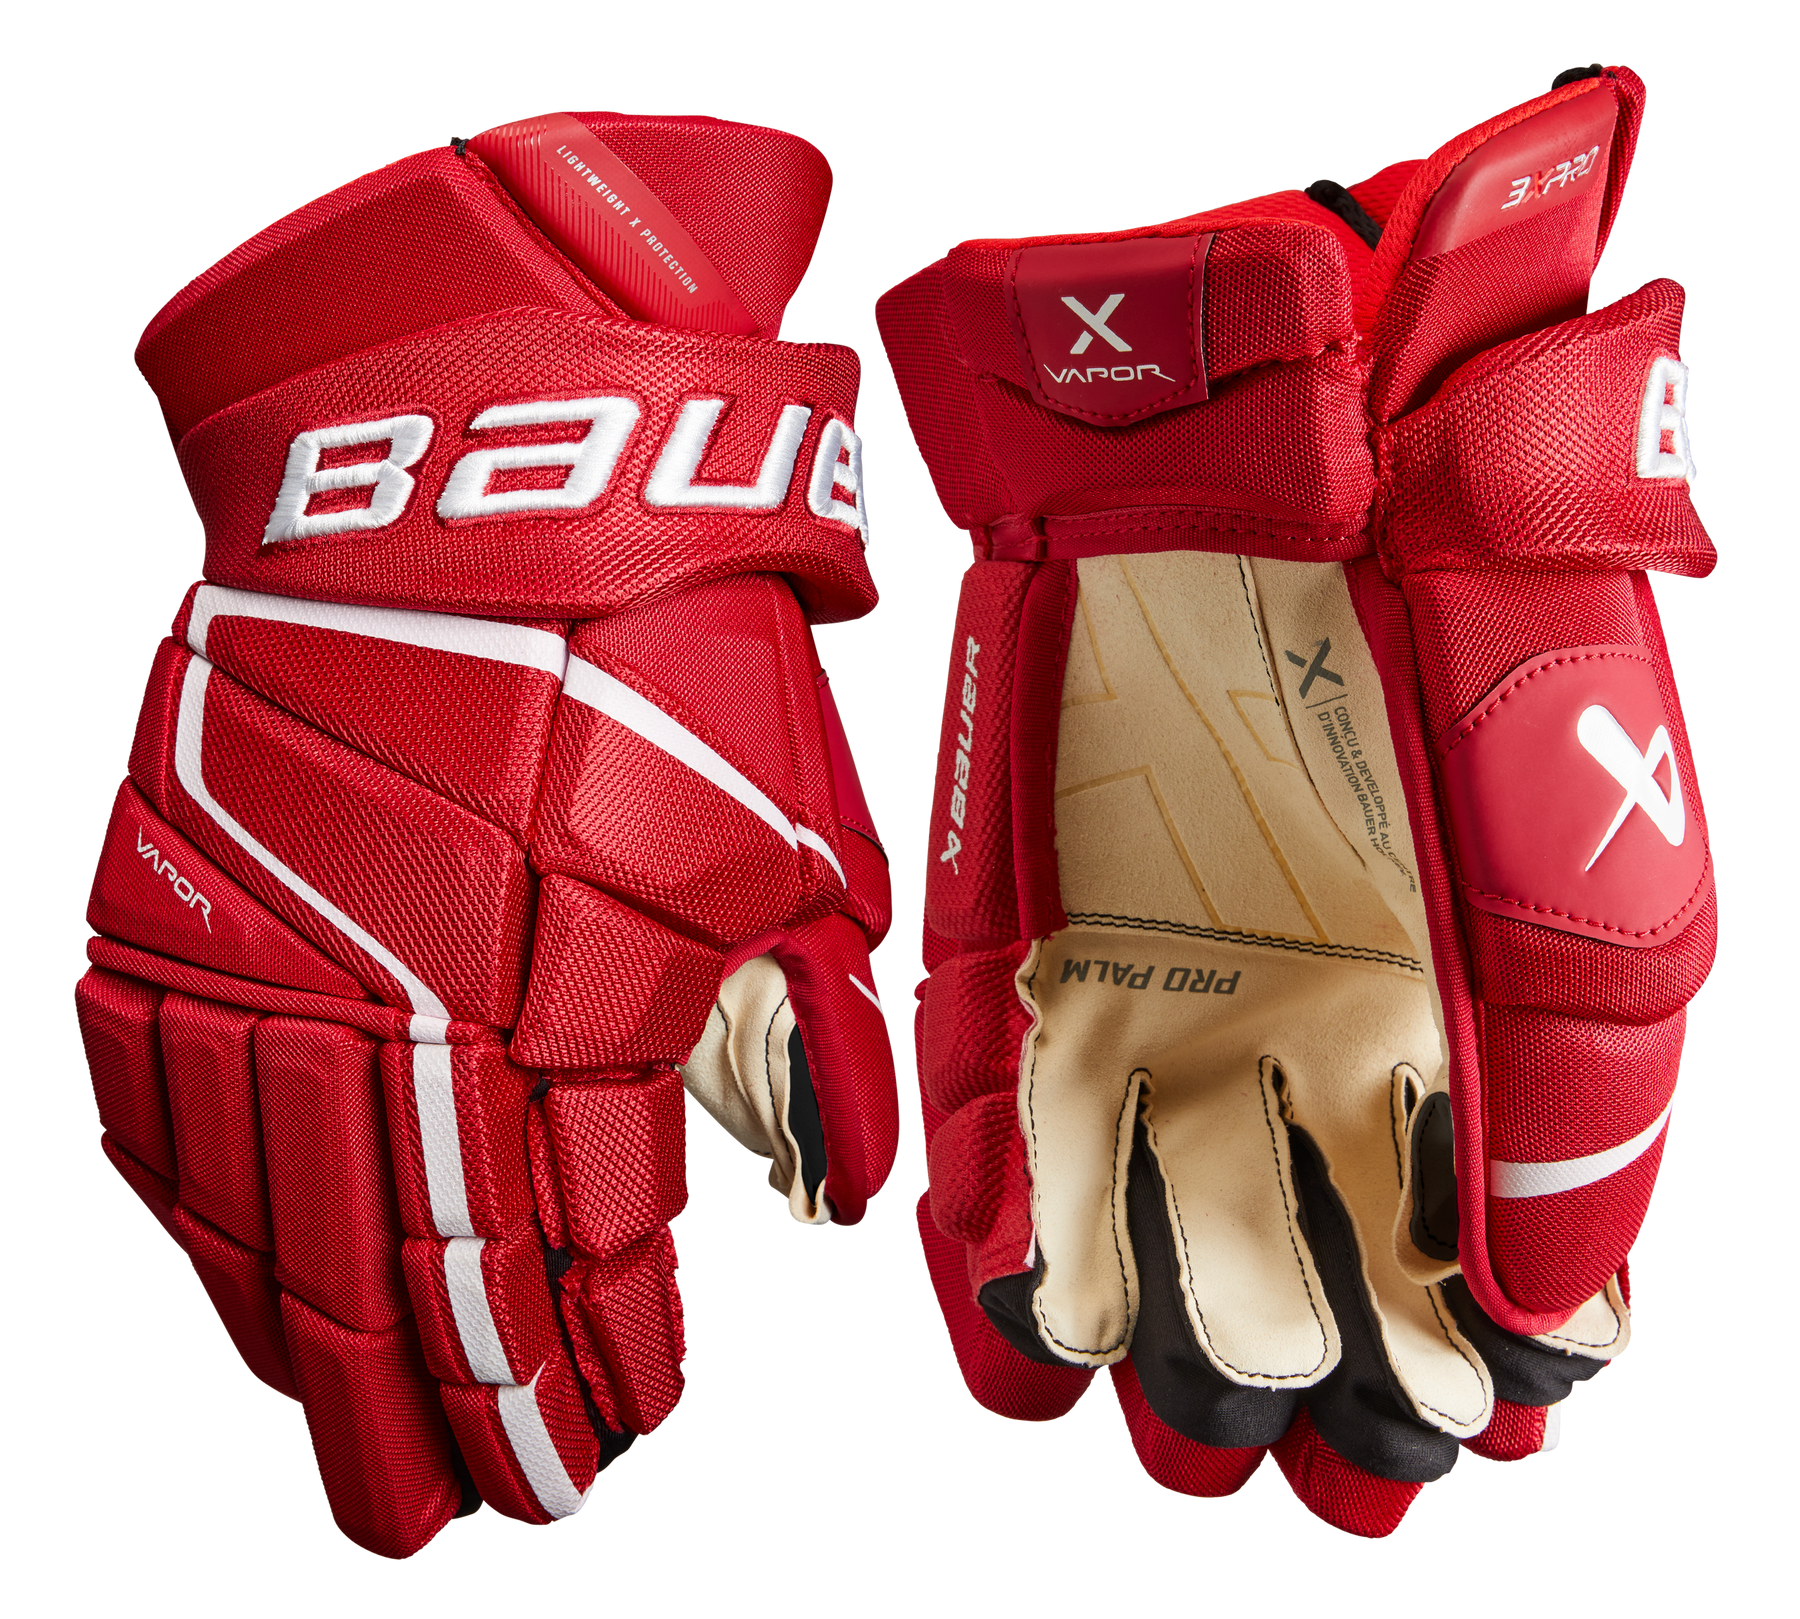 Bauer Vapor 3X Pro Senior Hockey Gloves